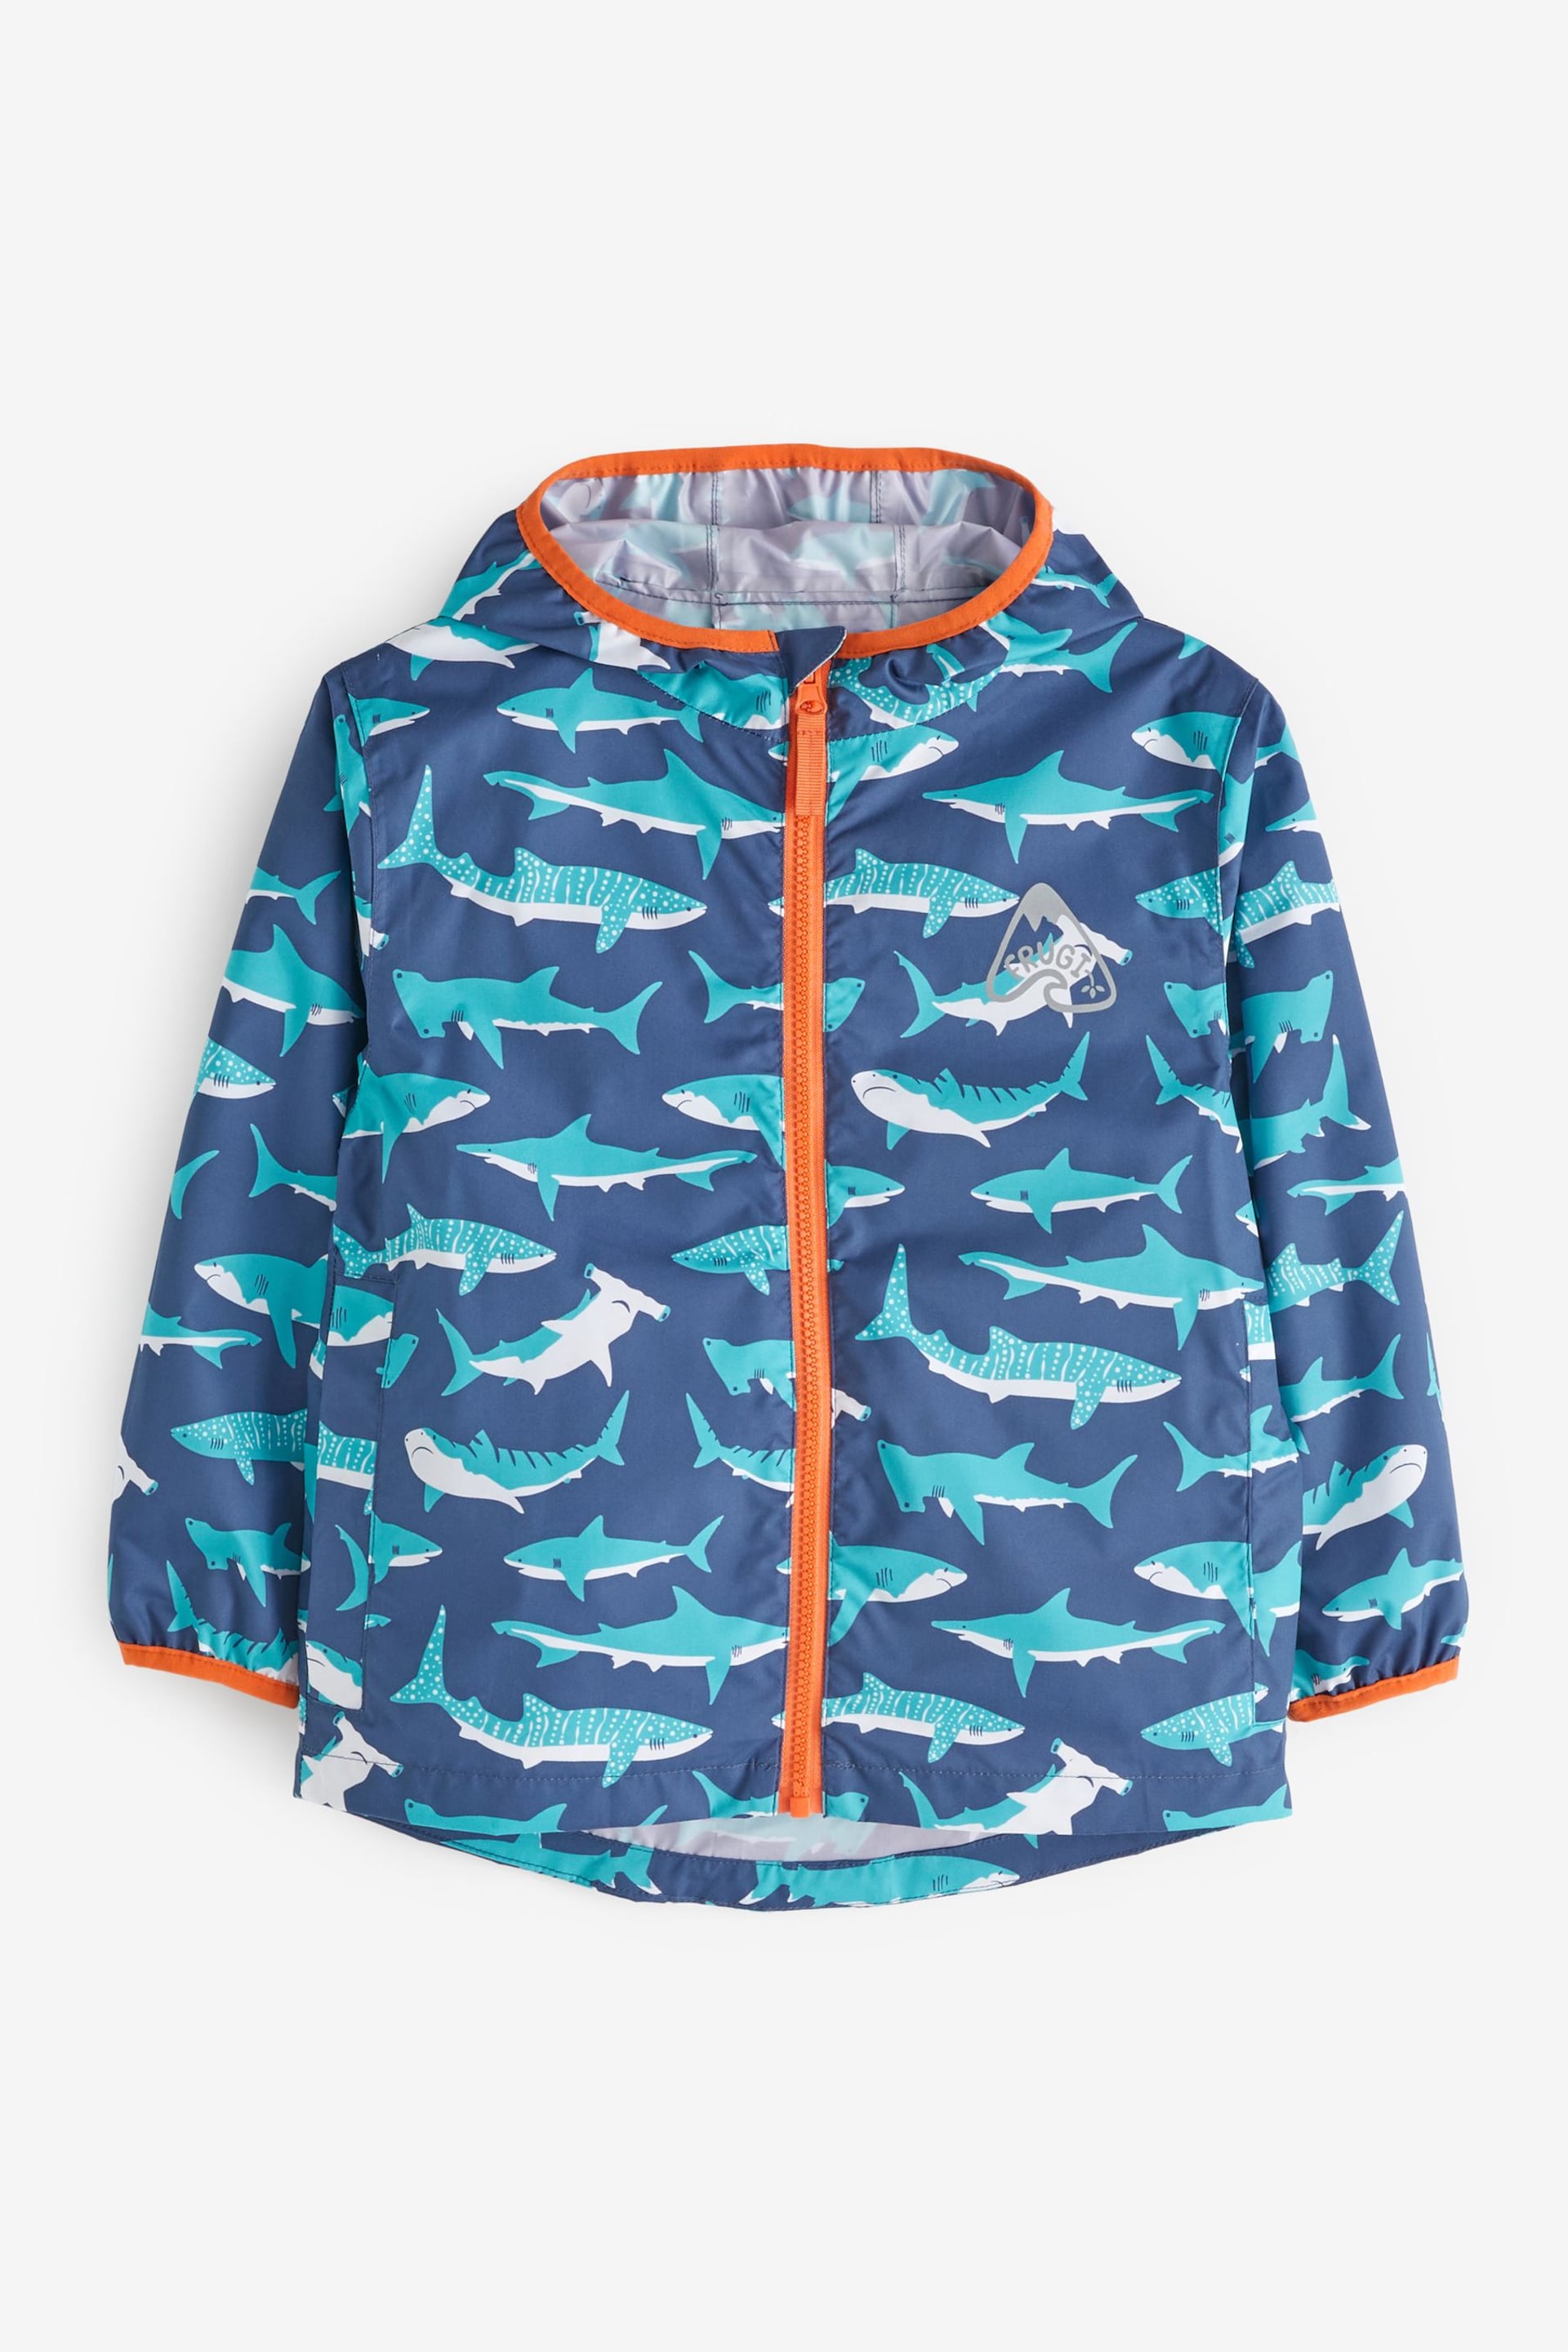 Frugi Waterproof Shark Print Rain or Shine Jacket - Image 2 of 5